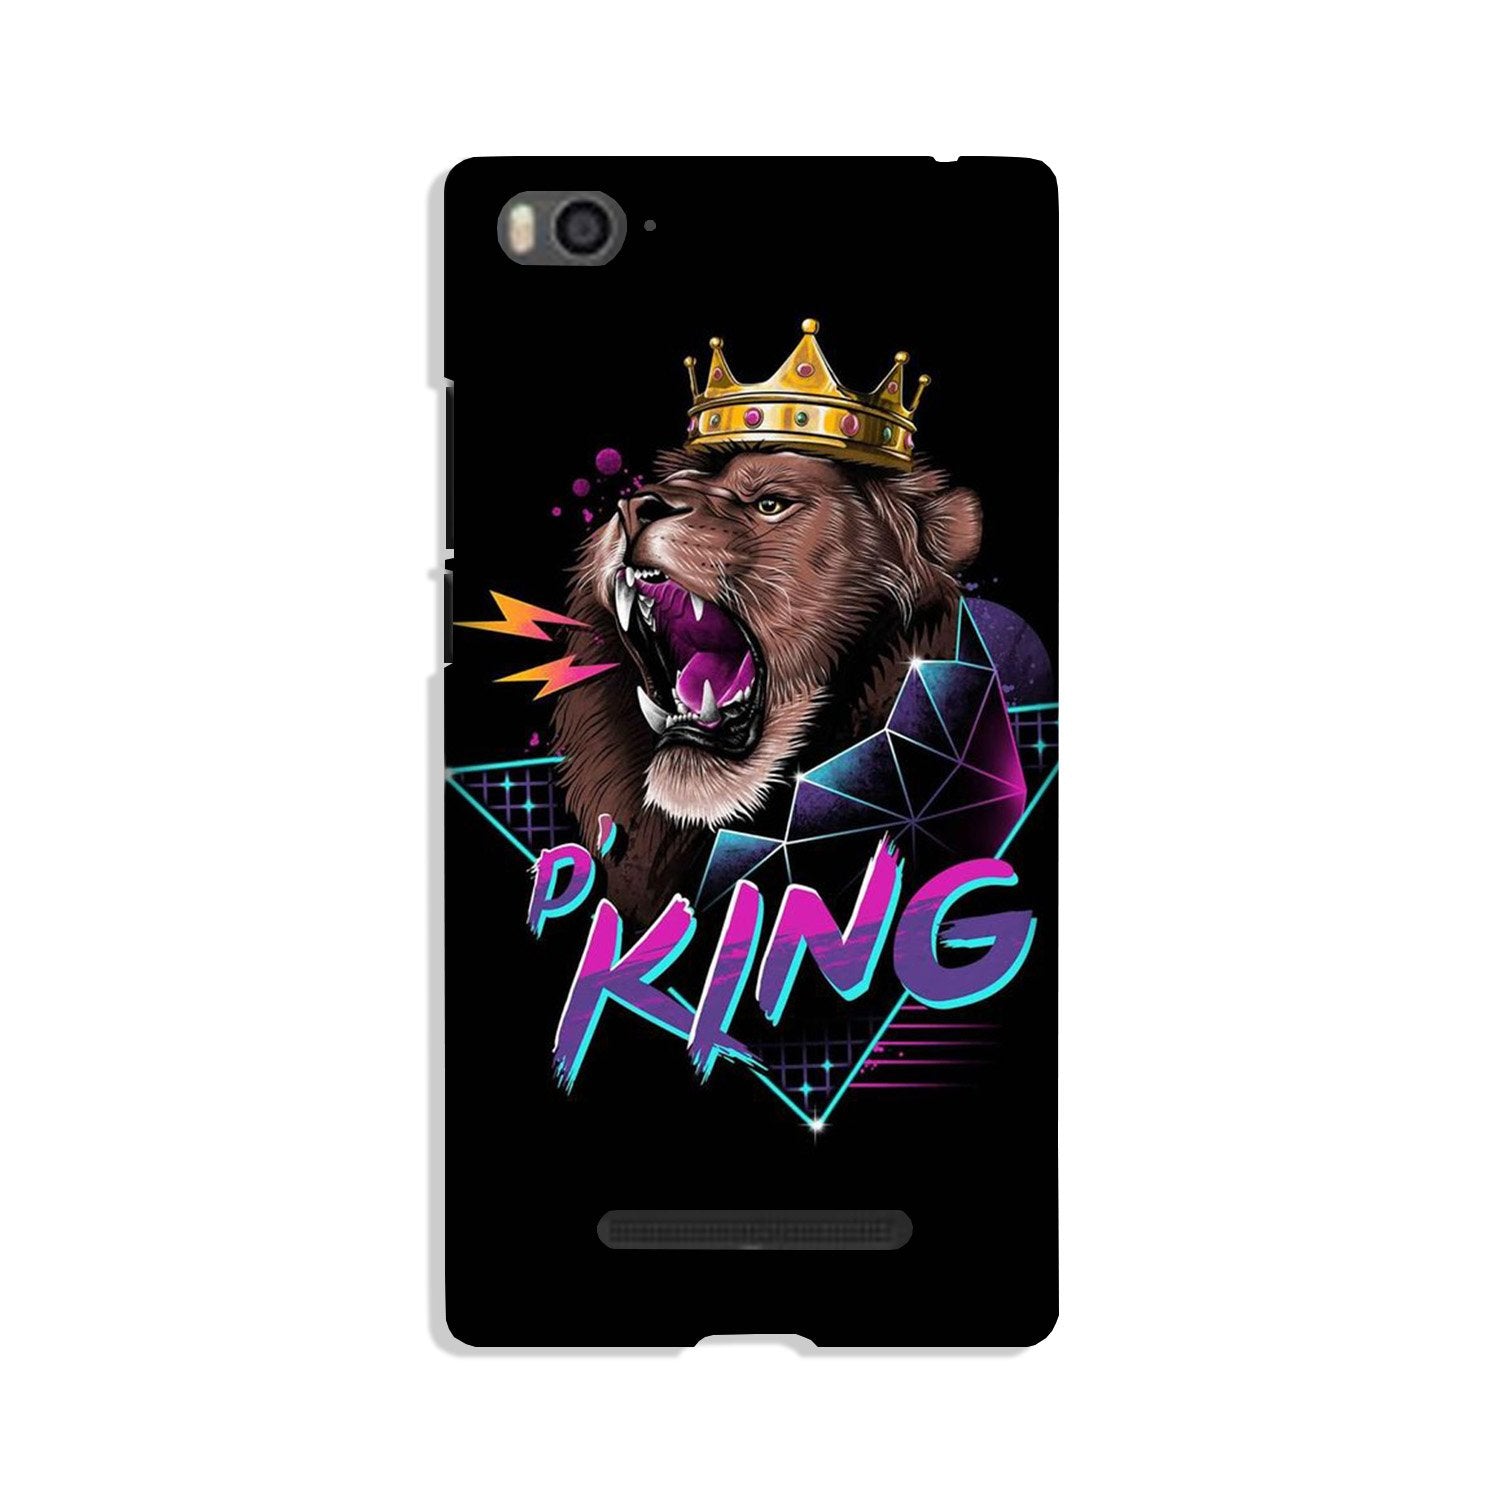 Lion King Case for Xiaomi Mi 4i (Design No. 219)